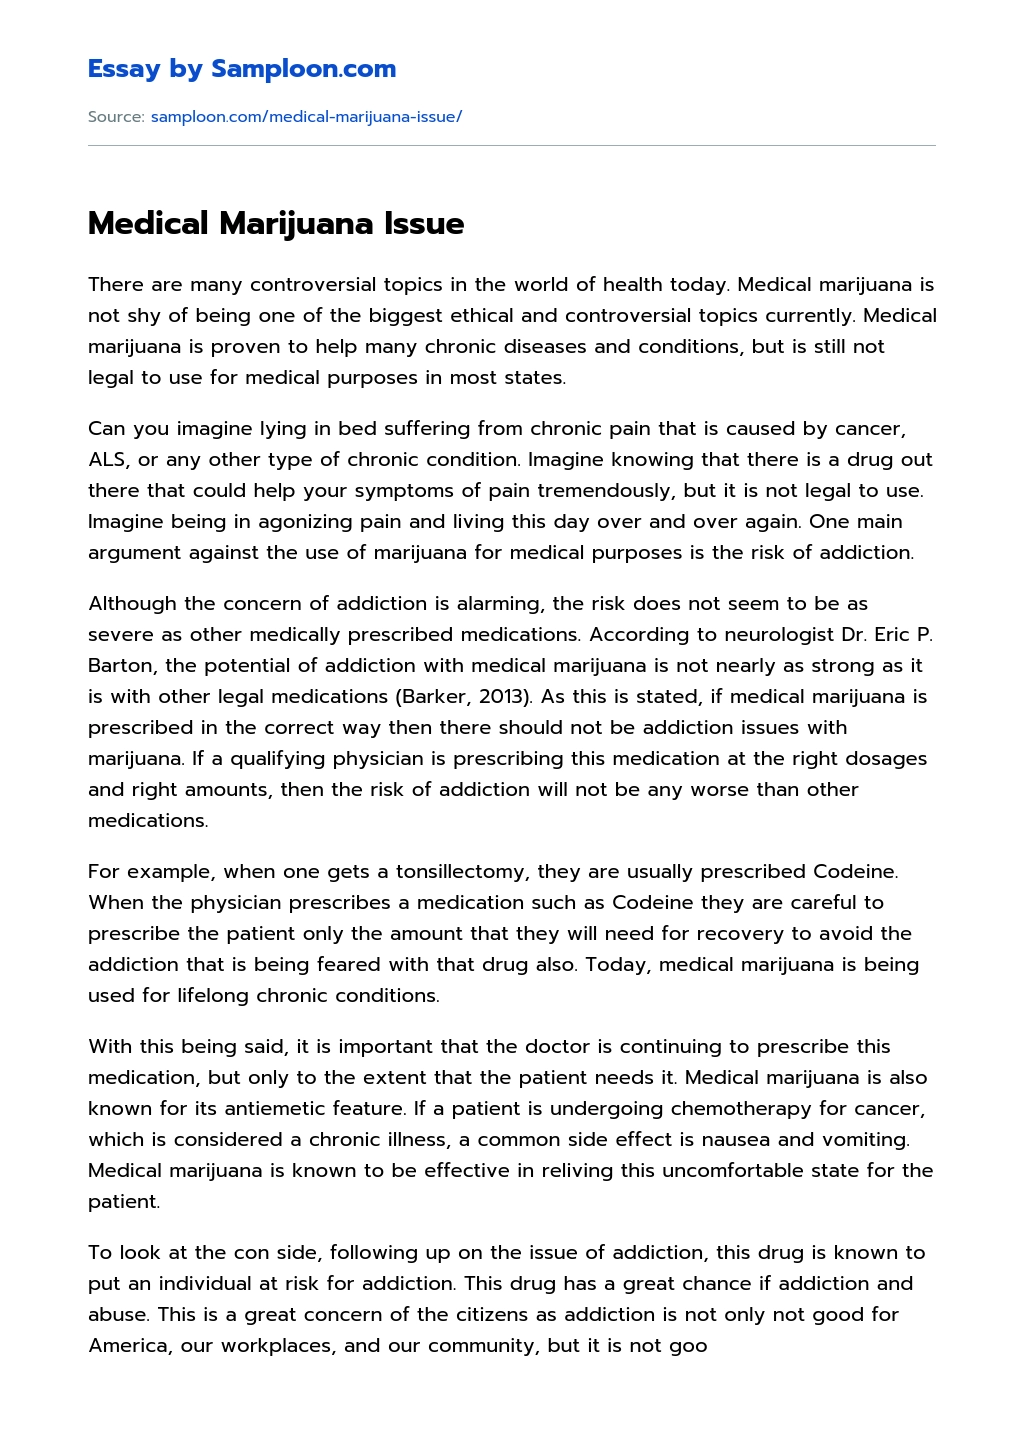 Medical Marijuana Issue essay